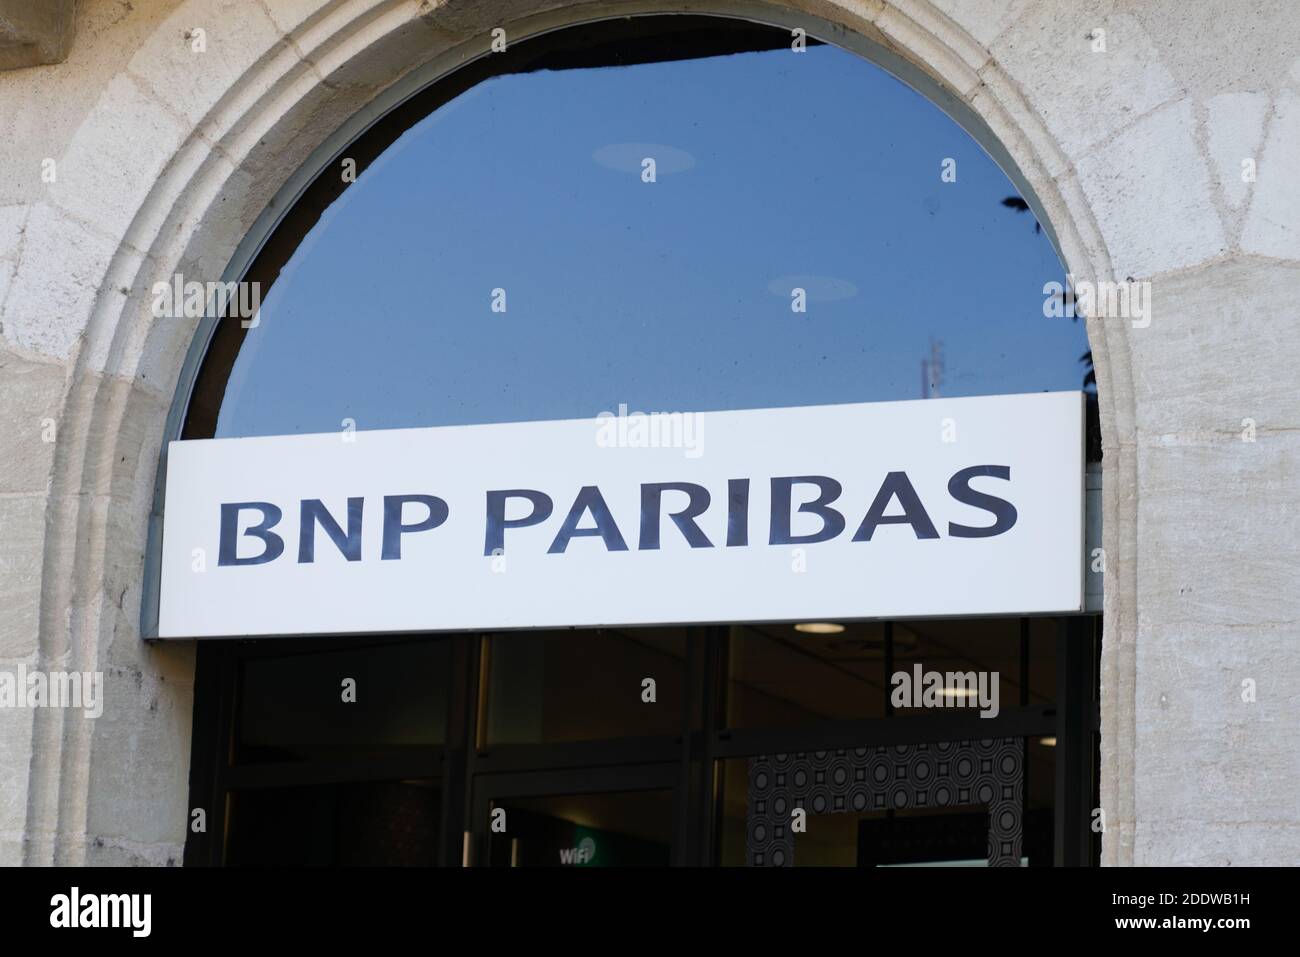 Burdeos , Aquitania / Francia - 11 11 2020 : BNP paribas logotipo y texto signo de la oficina bancaria multinacional francesa Foto de stock